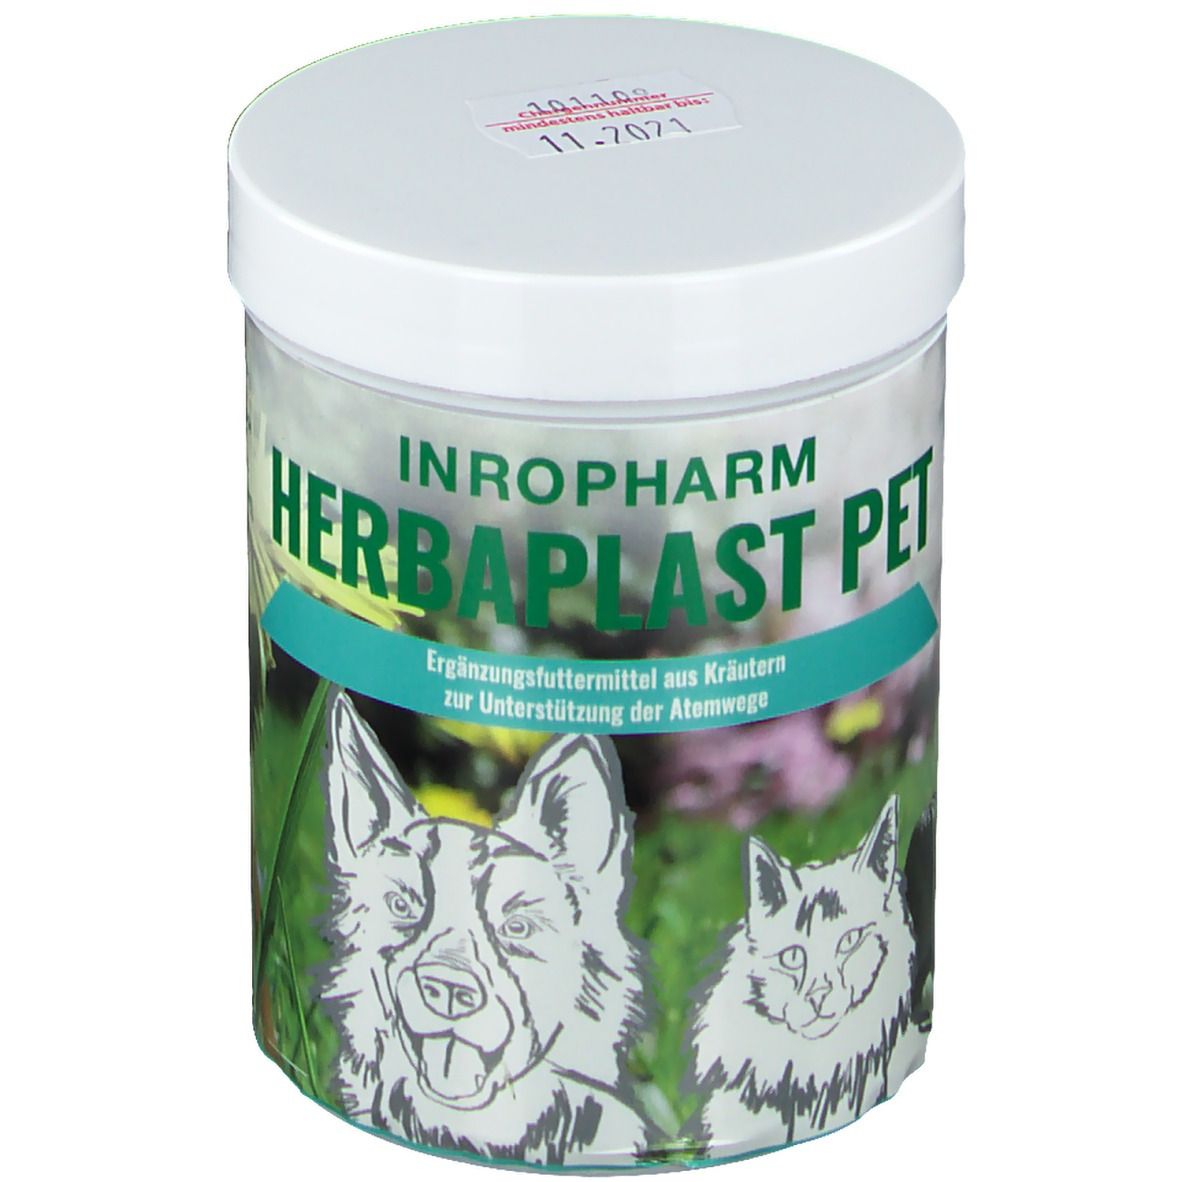 Image of Herbaplast pet